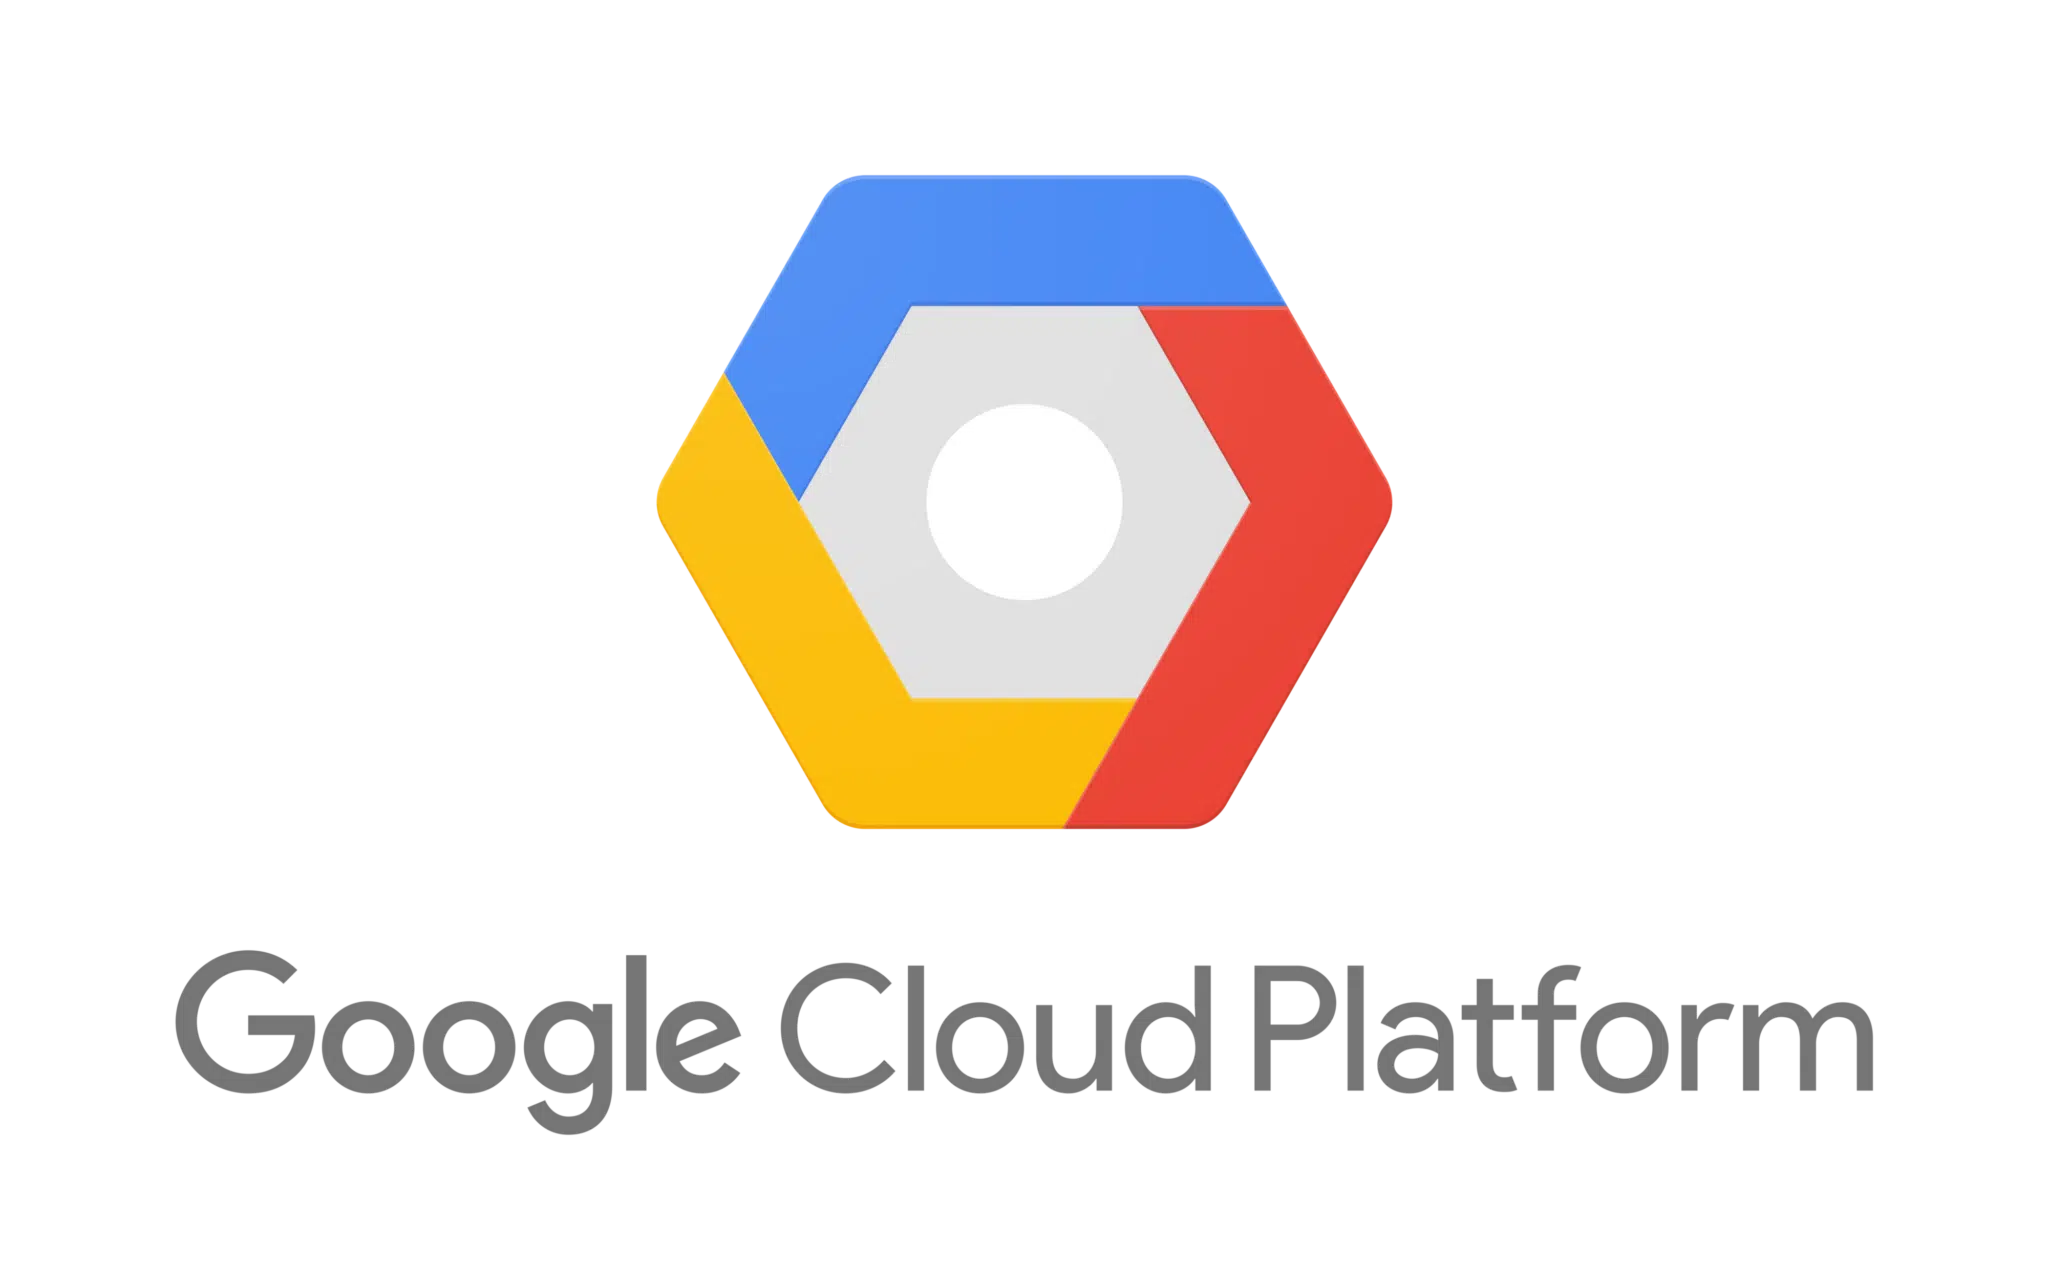 Google Cloud Platform Asset Discovery